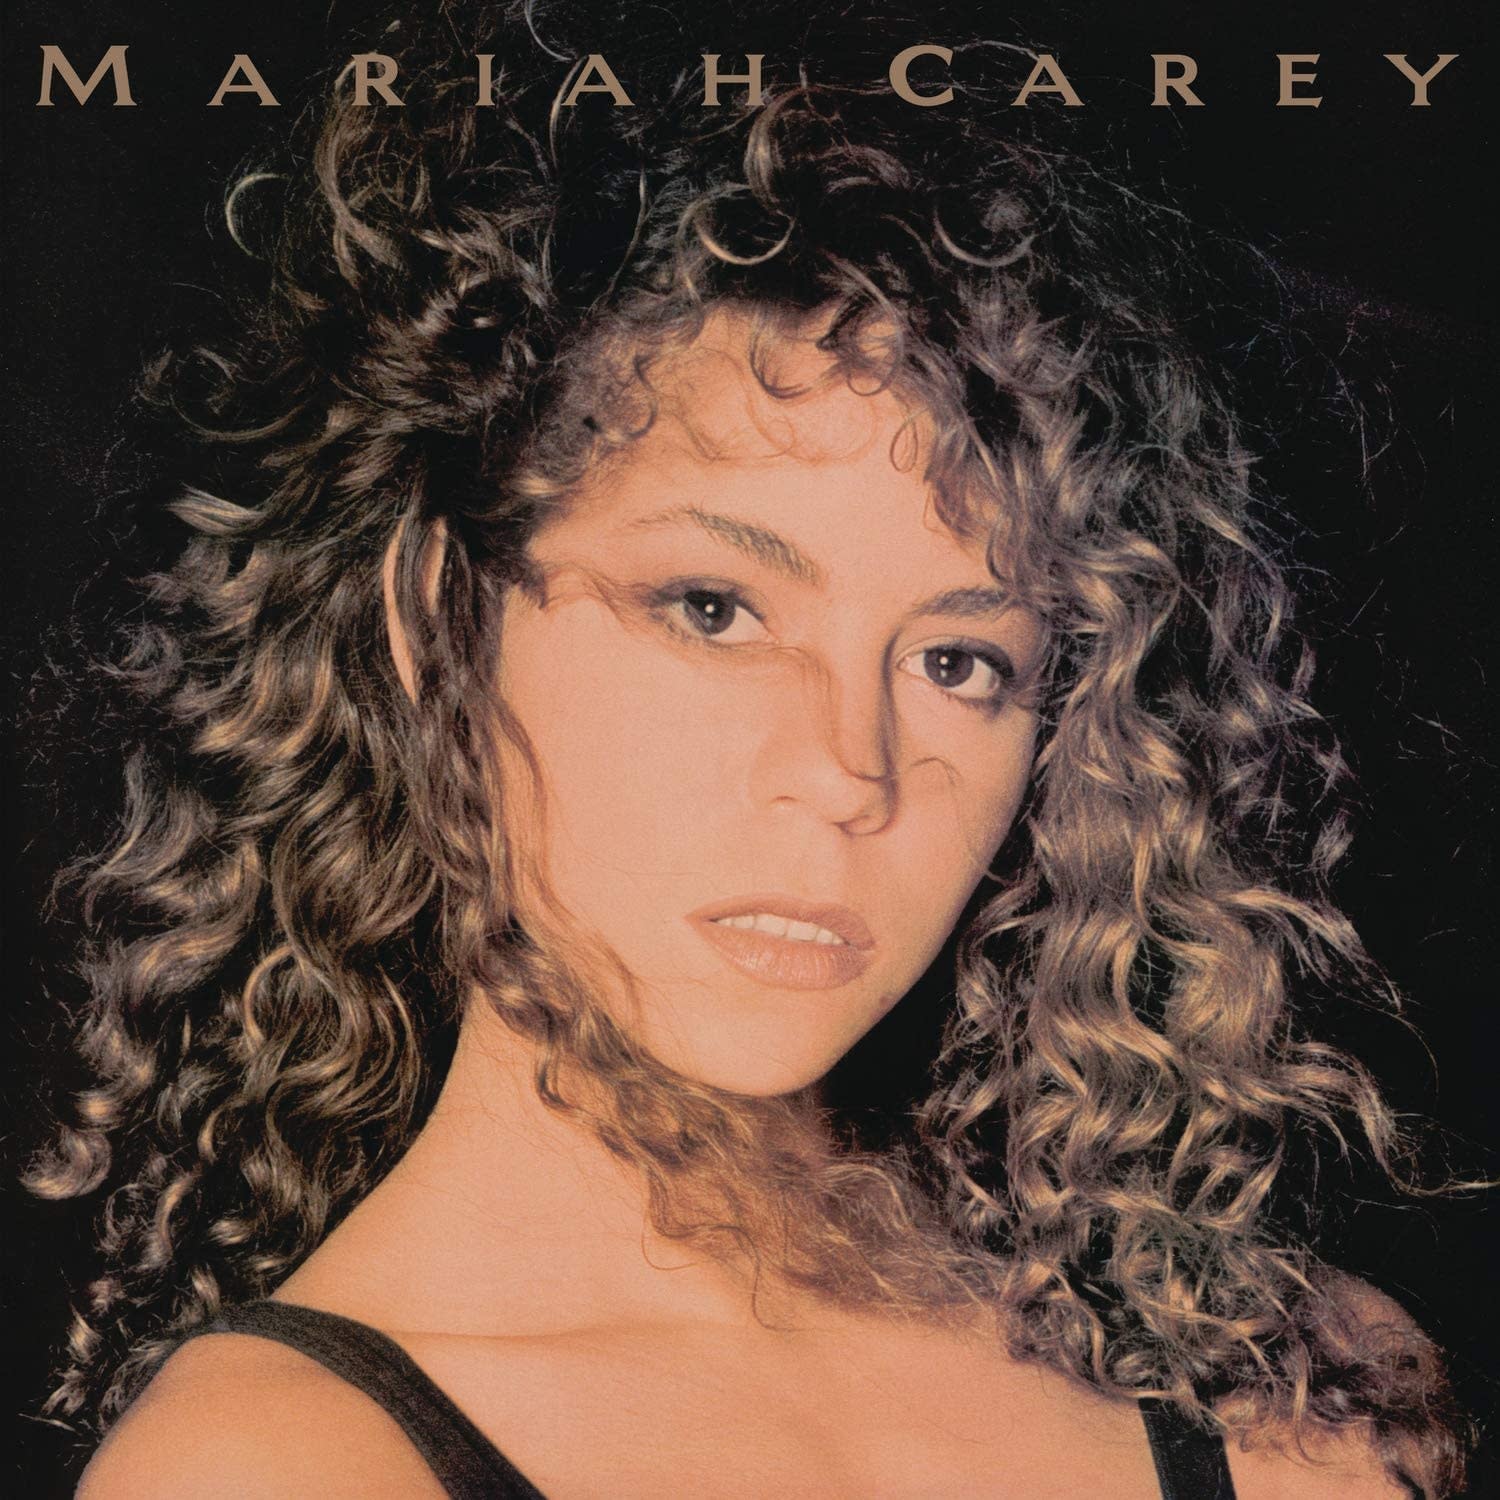 Mariah Carey - Mariah Carey (2020 Remaster) [Vinyl]